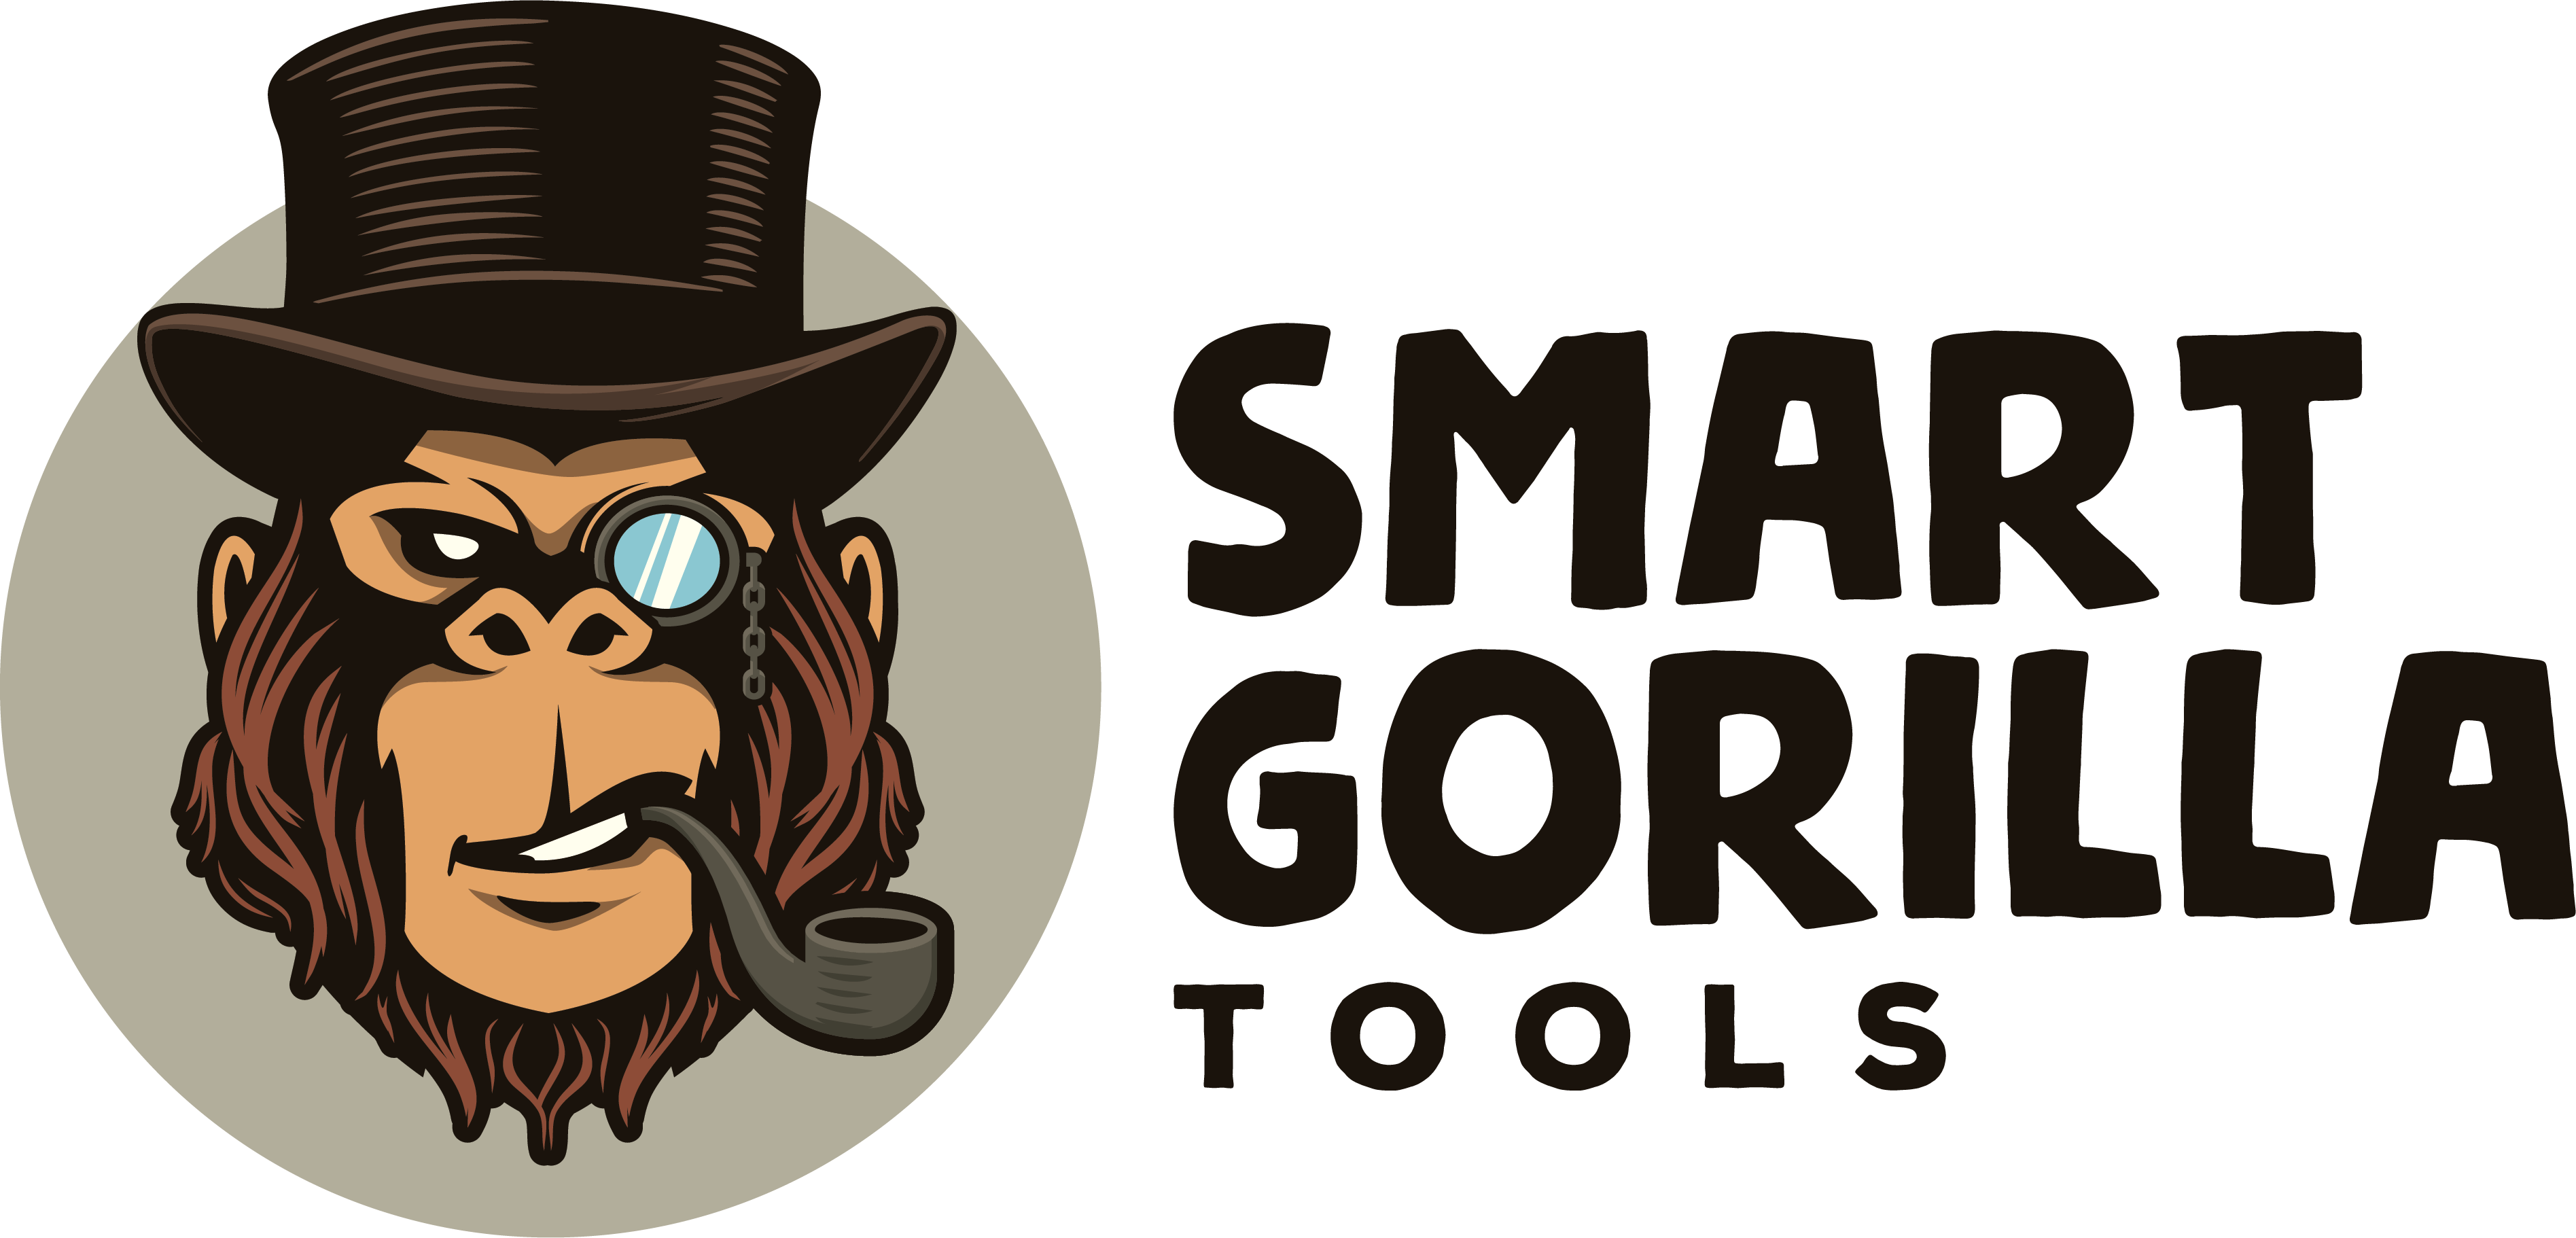 Smart Gorilla Tools - Bento Box Onlineshop Logo - Hier Bento Boxen Kaufen